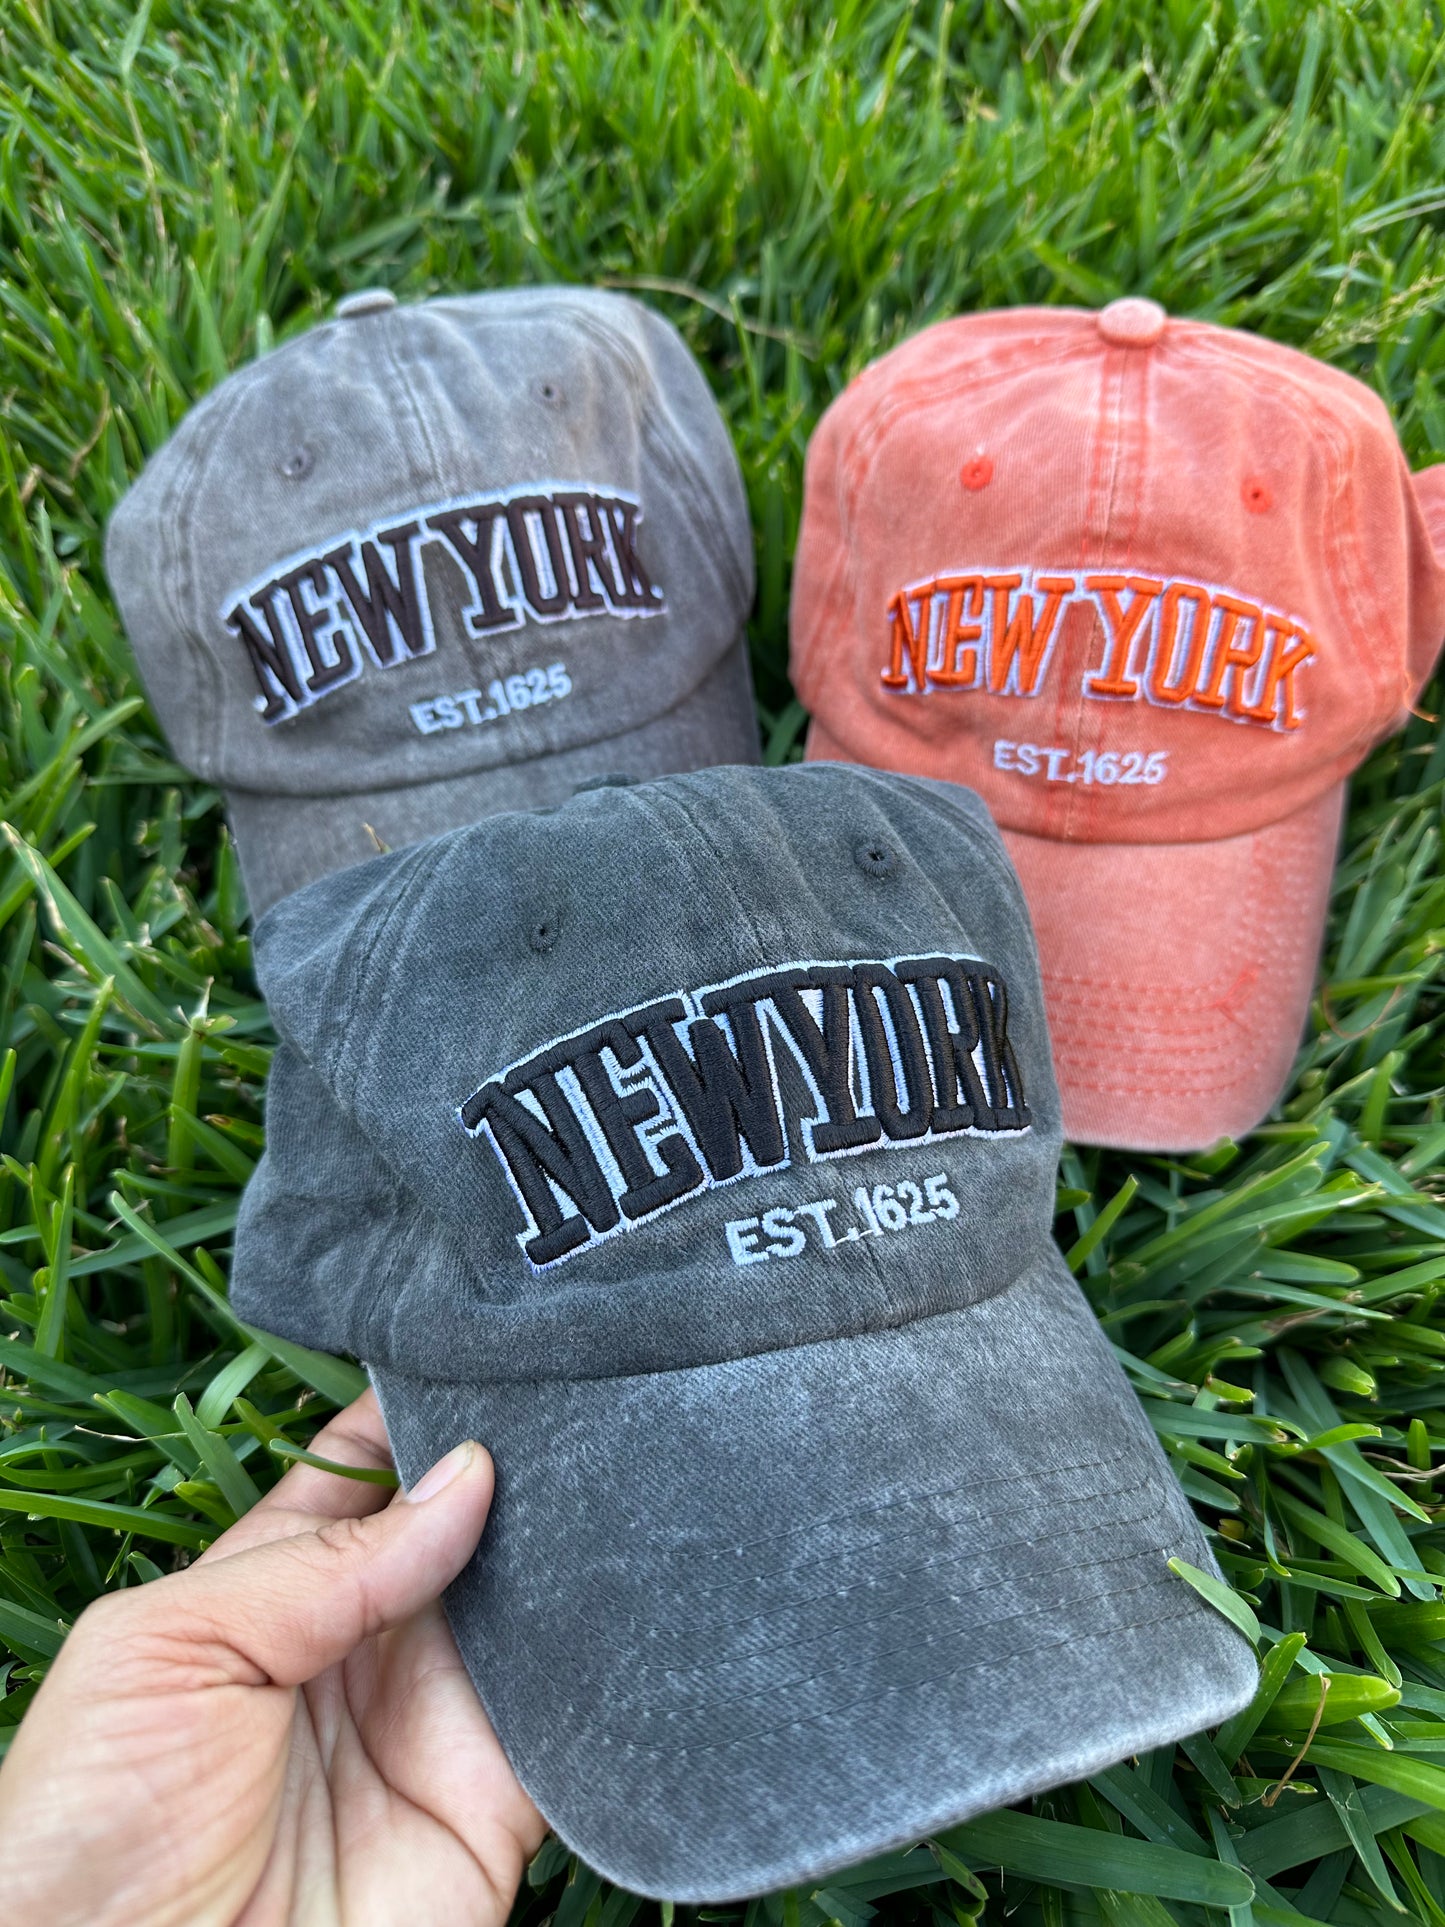 NEW YORK acid cap